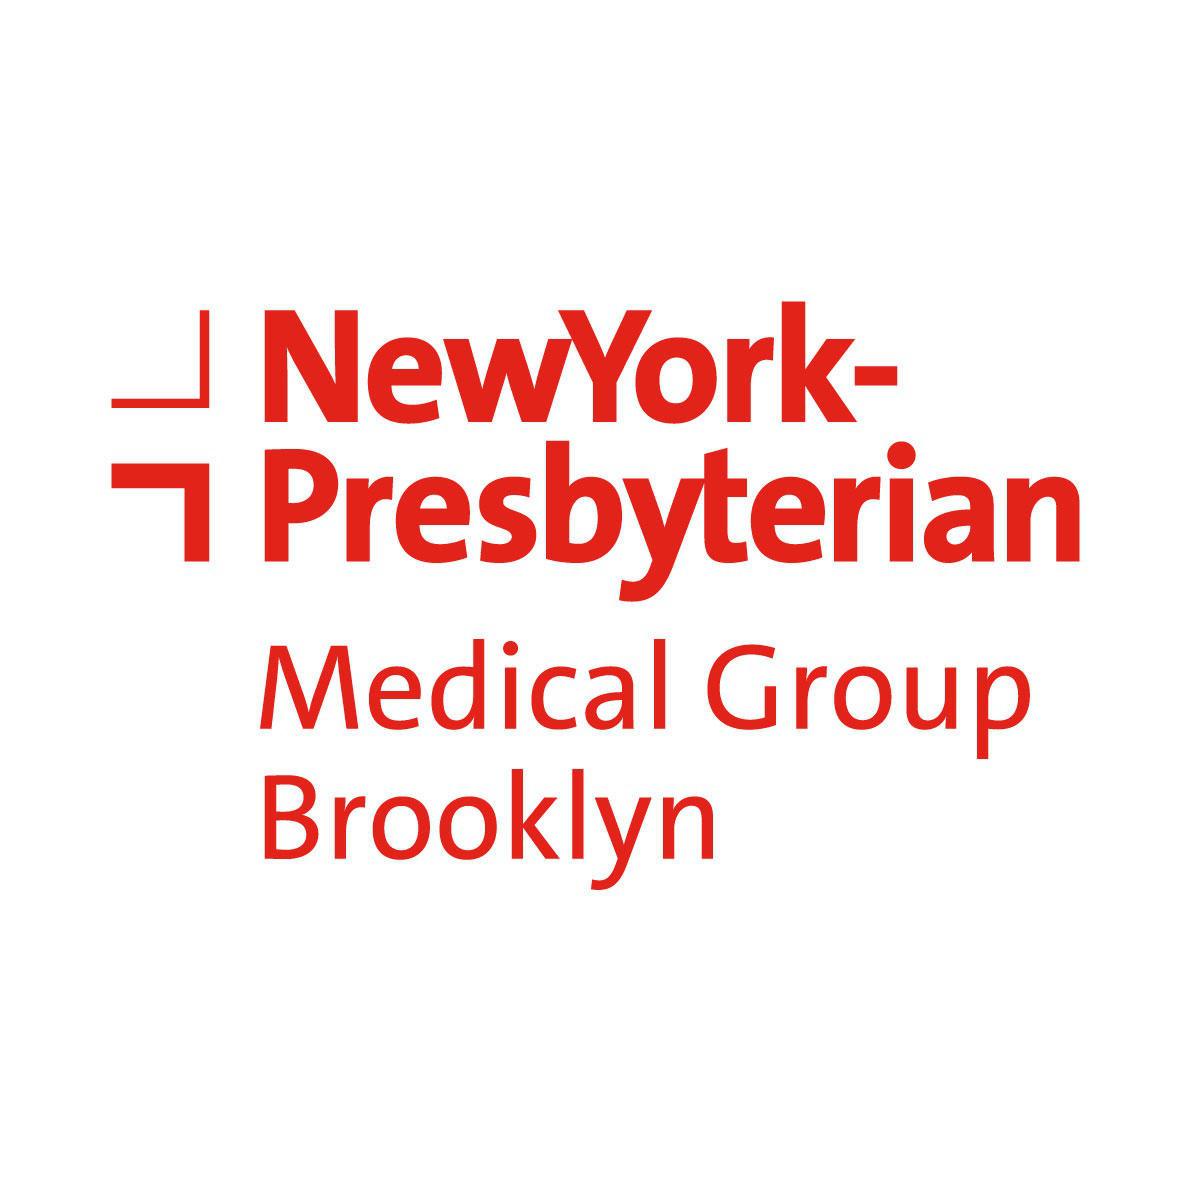 NewYork-Presbyterian Medical Group Brooklyn - Multi-Specialty